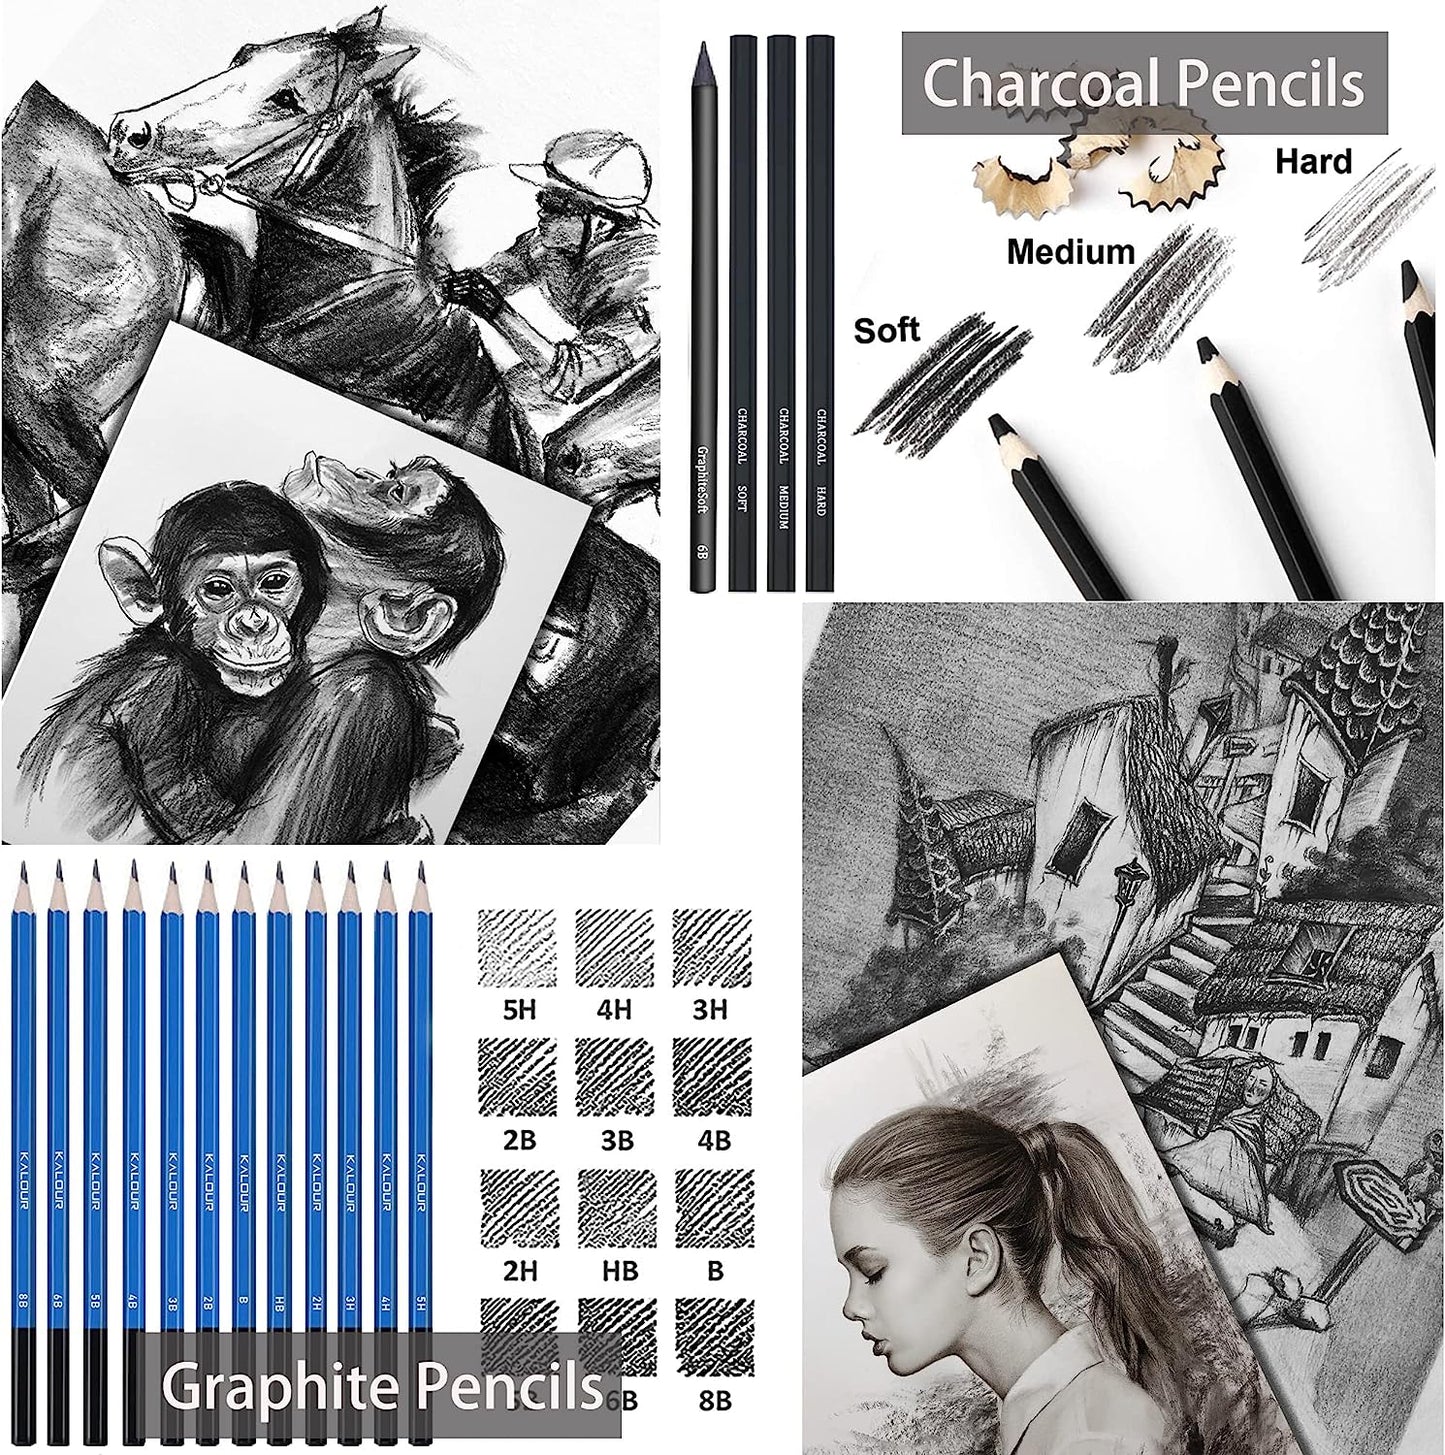 KALOUR Premium Drawing Pencil Set(96pcs),including 72 Colored Pencils